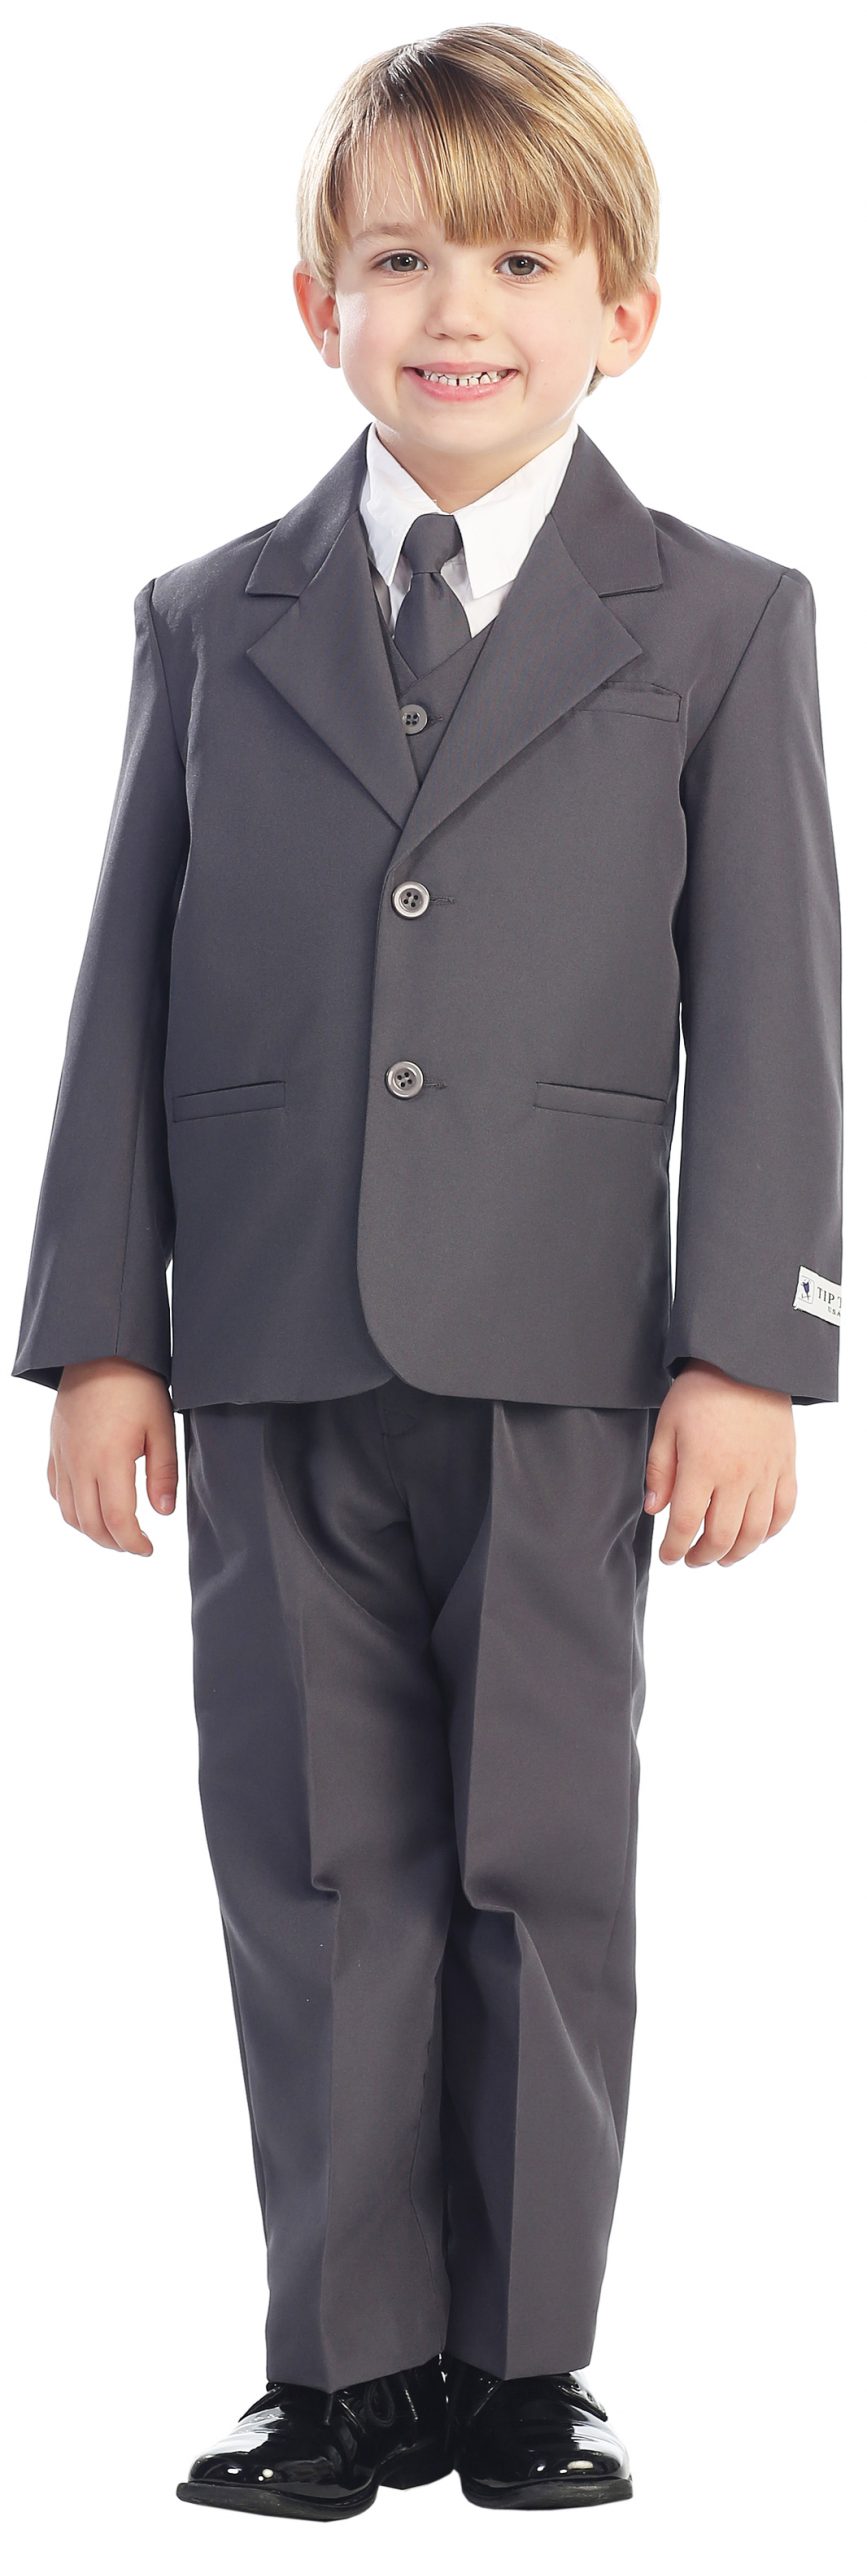 Avery Hill 5-Piece Boy's 2-Button Dress Suit Full-Back Vest - Charcoal XL (18 - 24 Months)